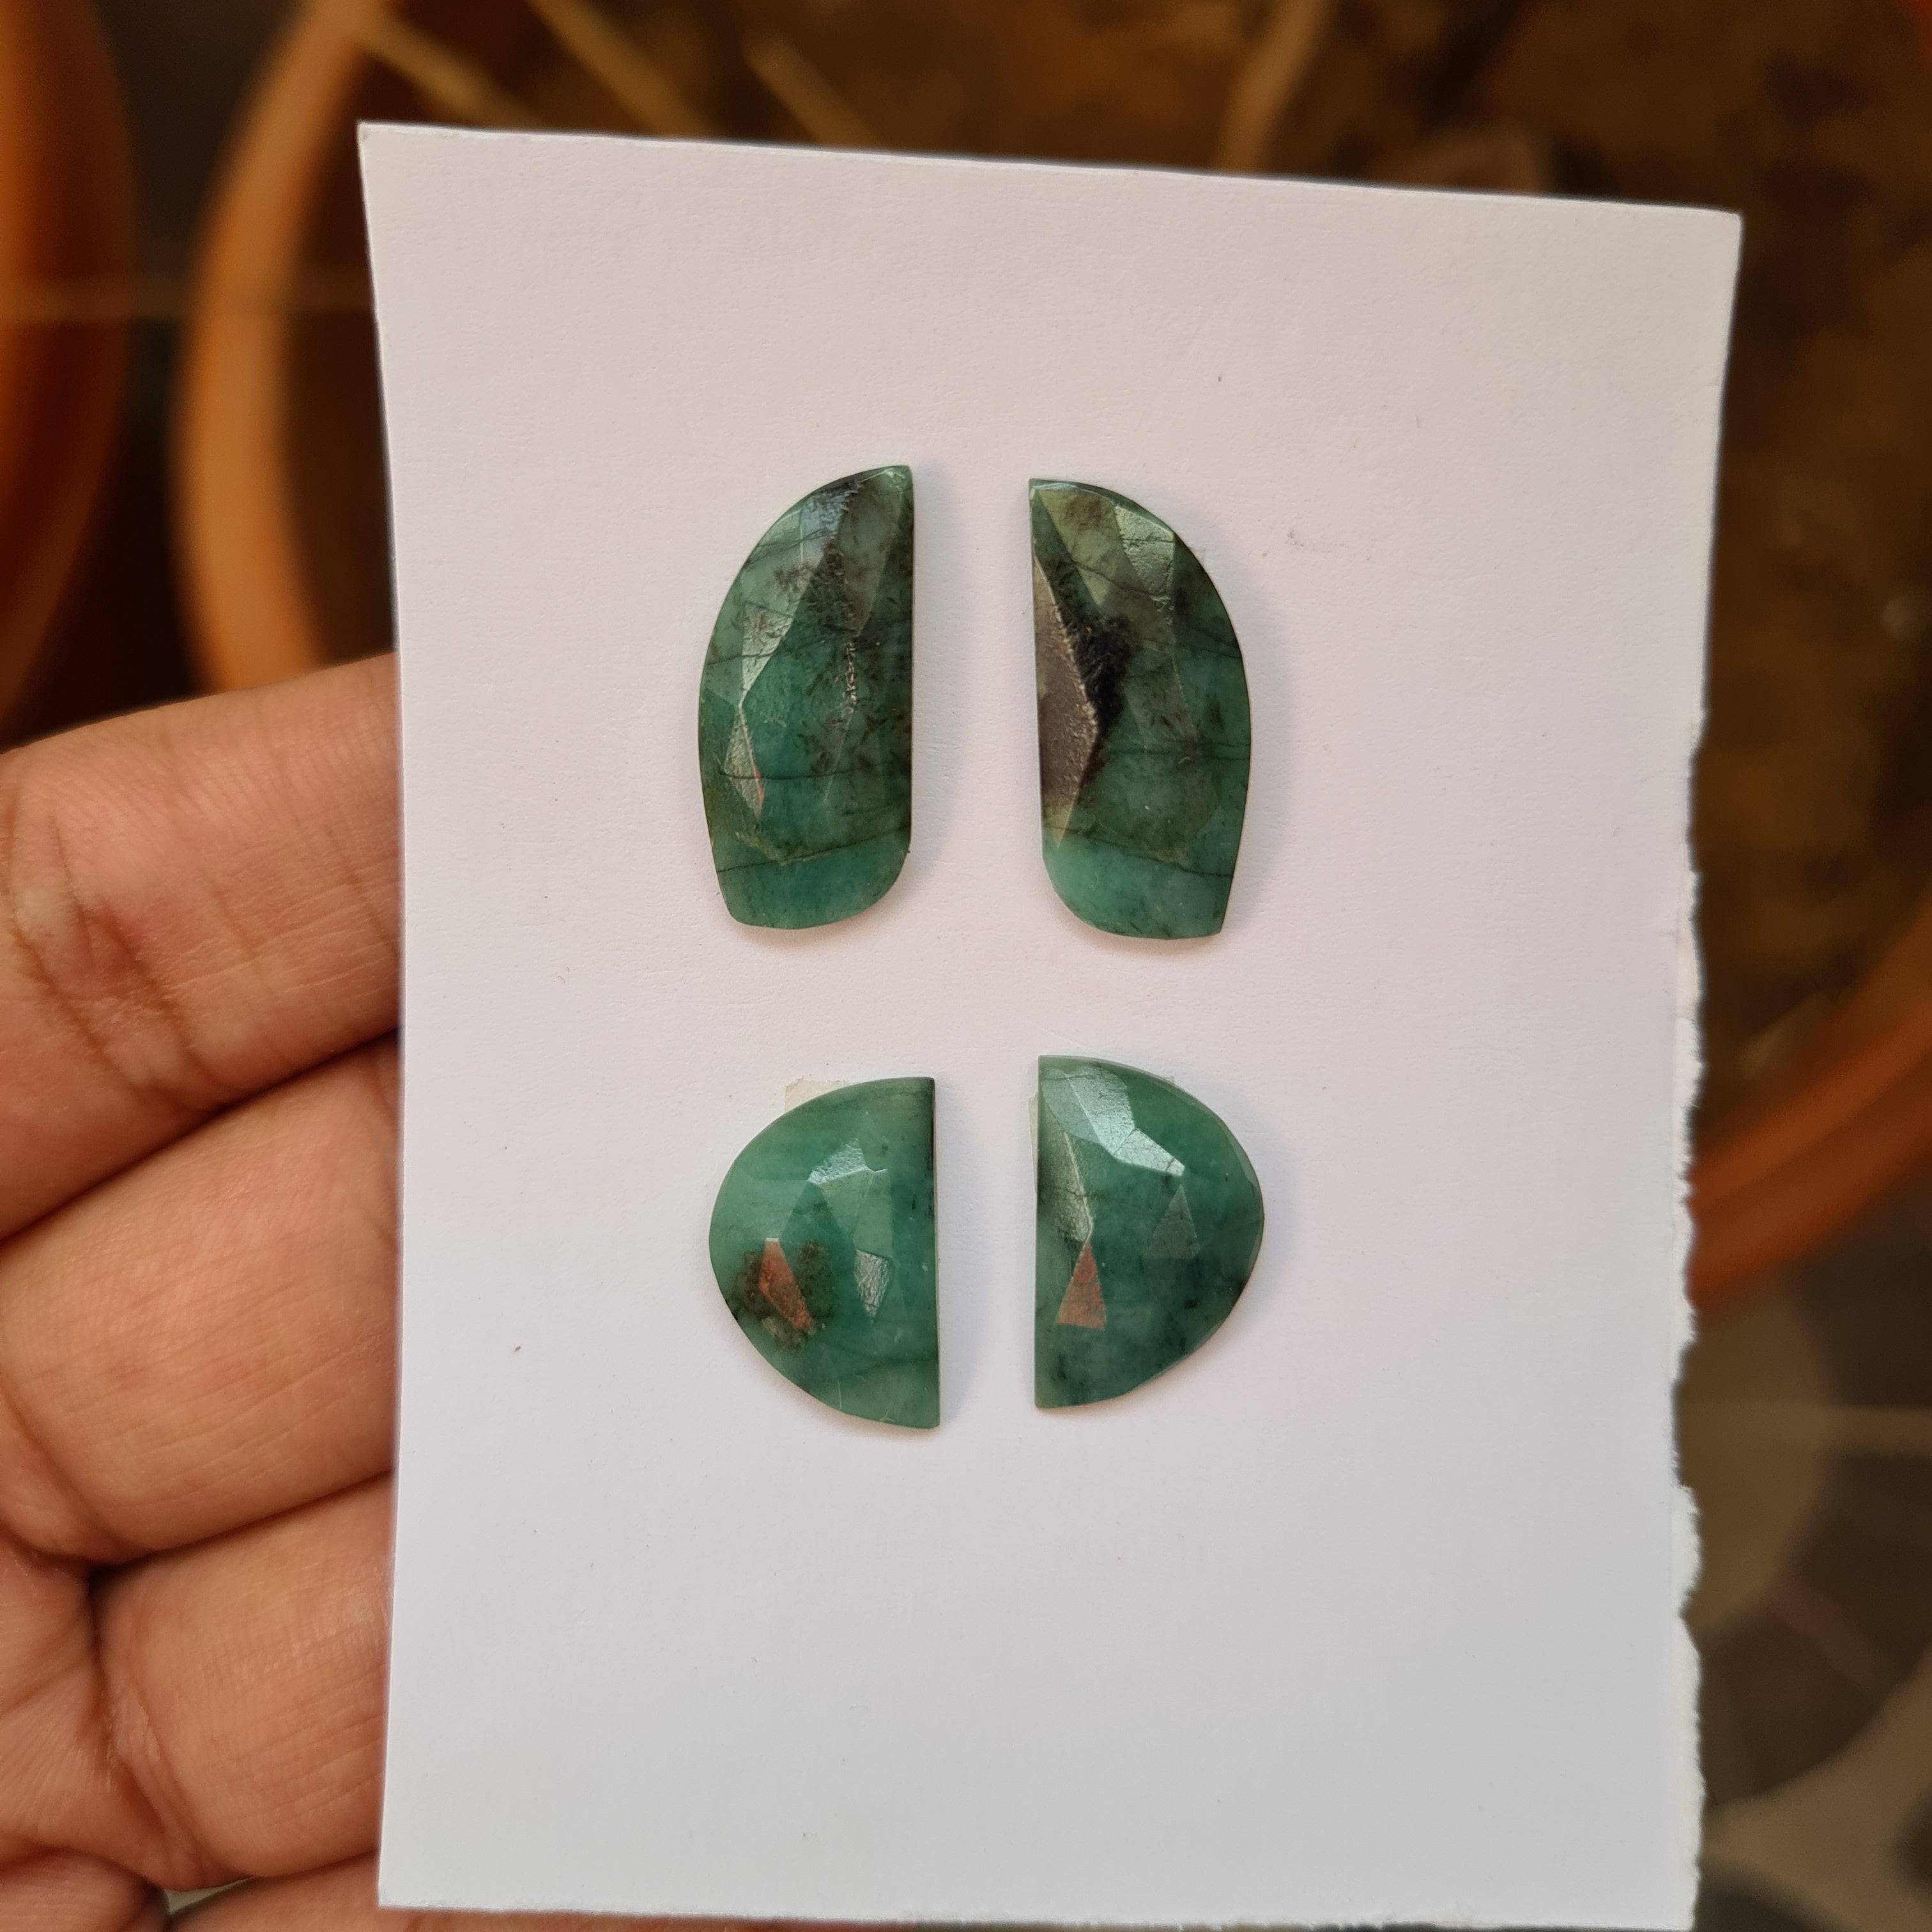 4 Pcs Mozambique Natural Emerald Stone Pairs with Flat backs | Fancy shape 17-21mm Size - The LabradoriteKing